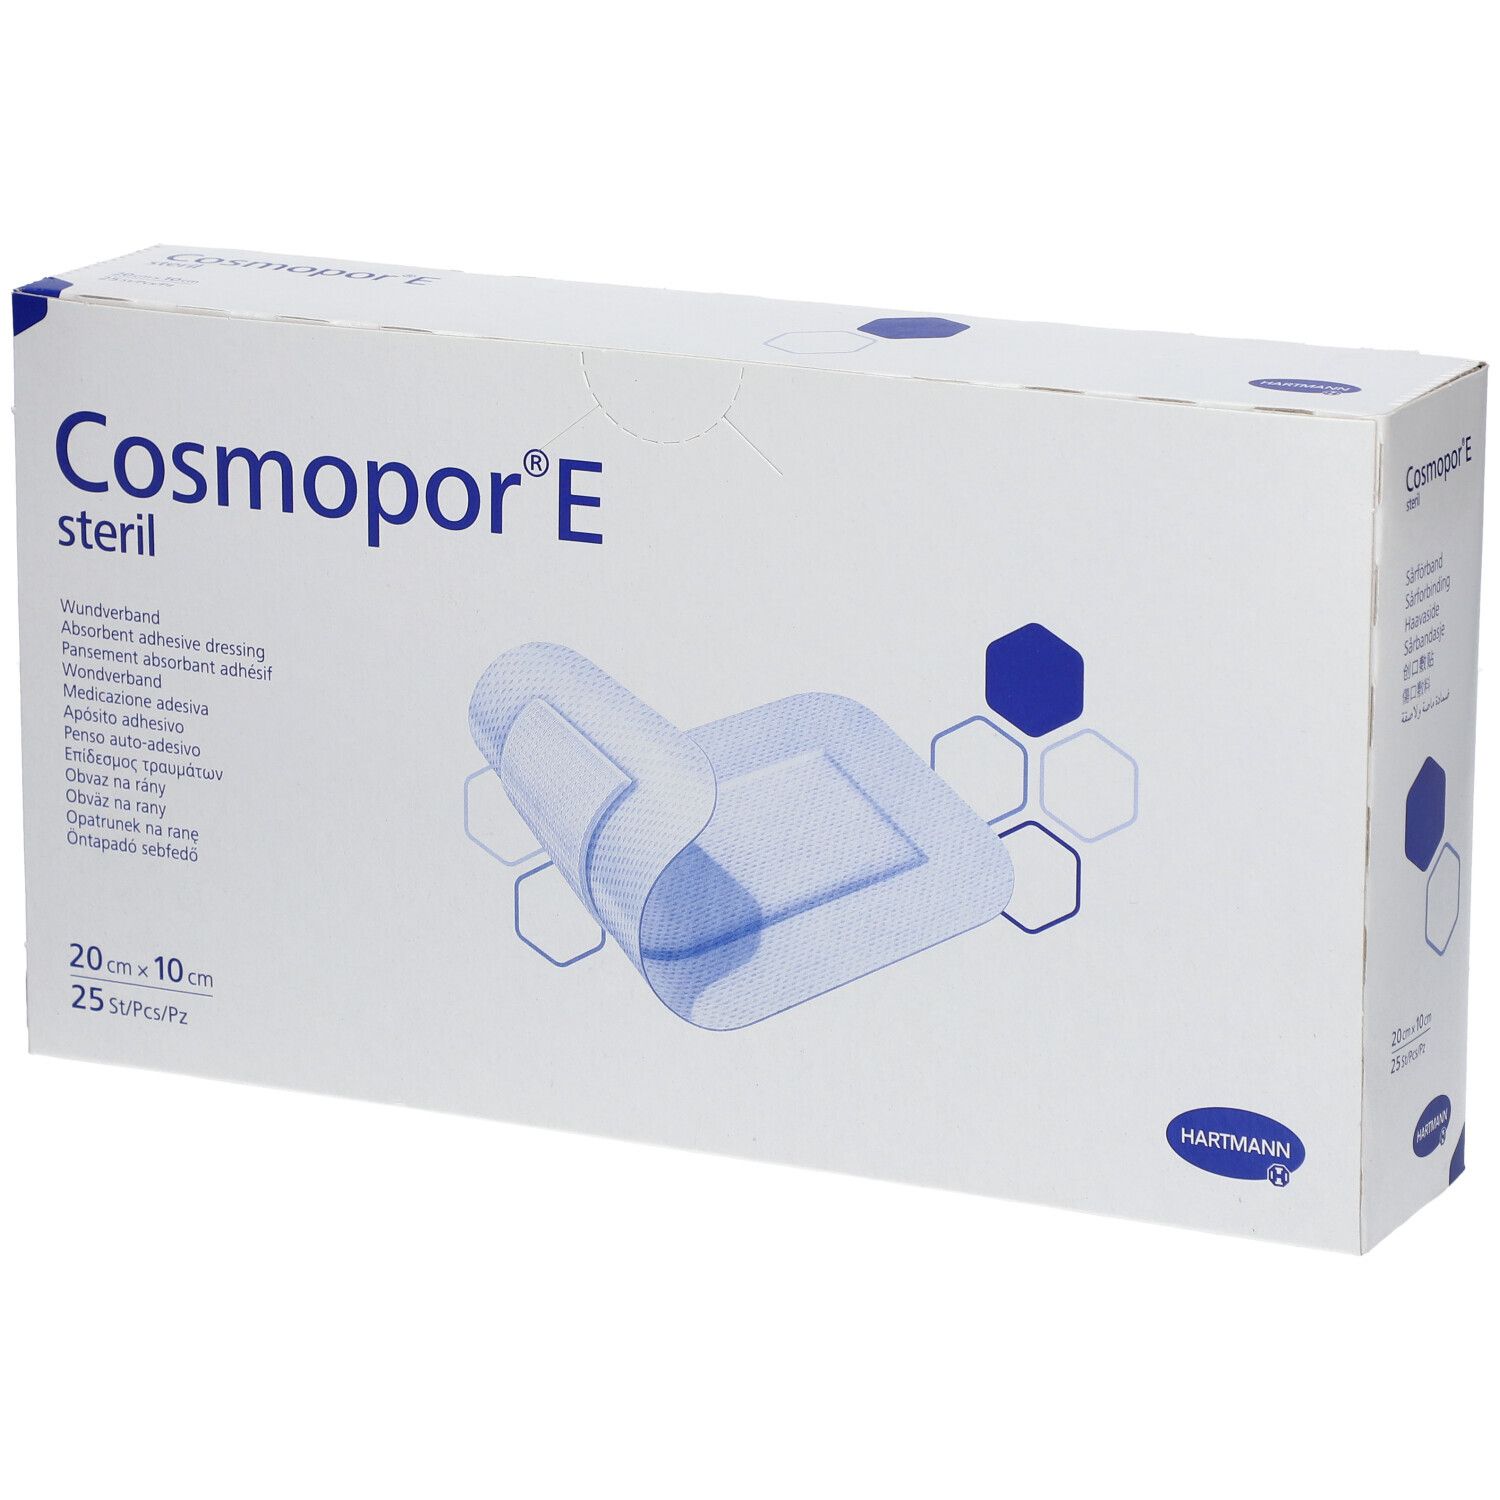 Image of Cosmopor® E steril 20 x 10cm